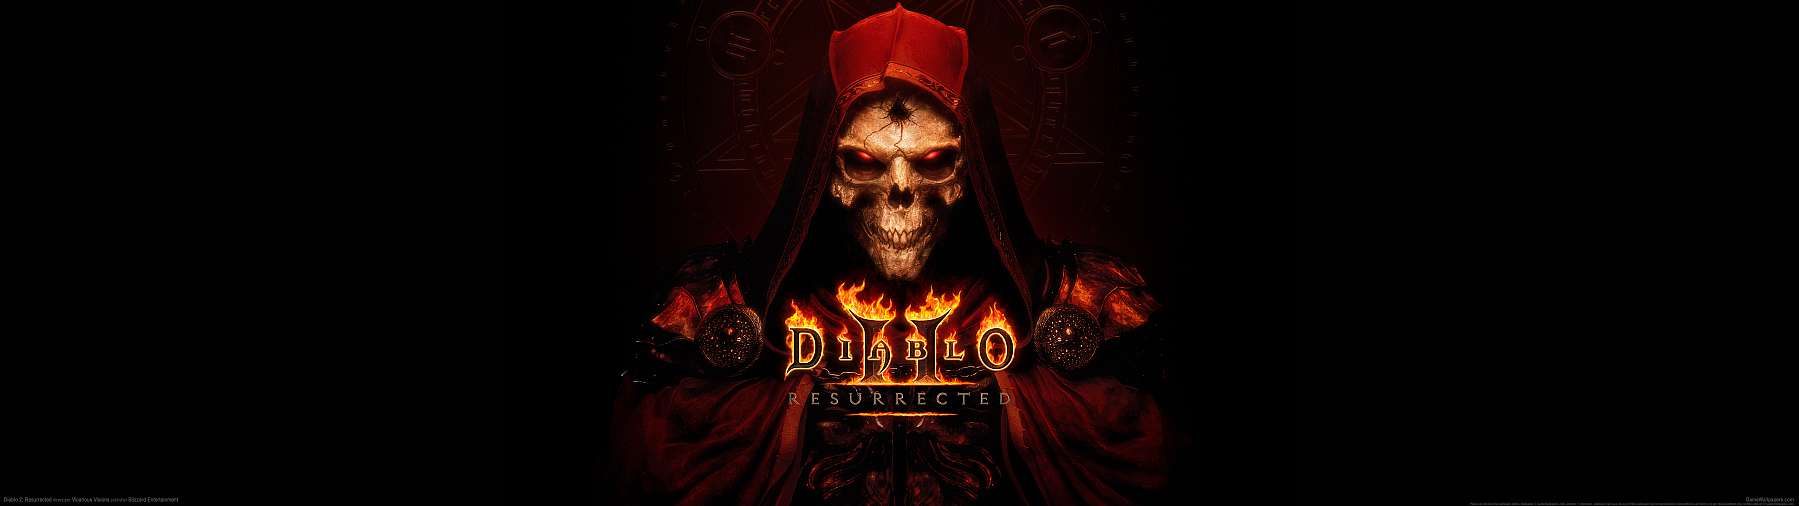 Diablo 2: Resurrected superwide wallpaper or background 01